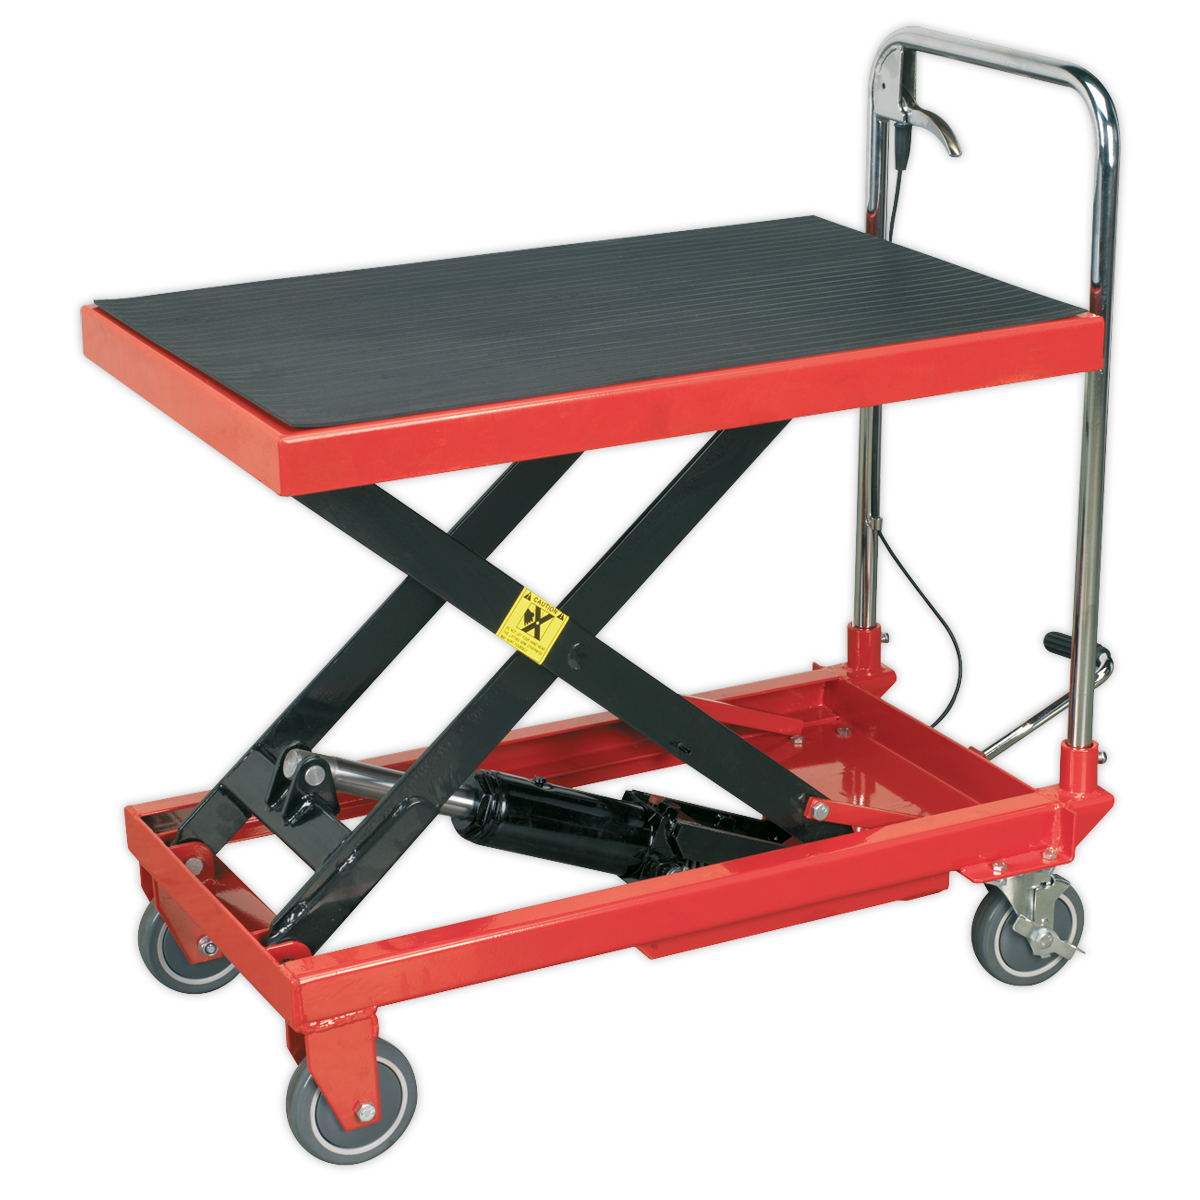 Hydraulic Scissor Lift Platform Table 300kg